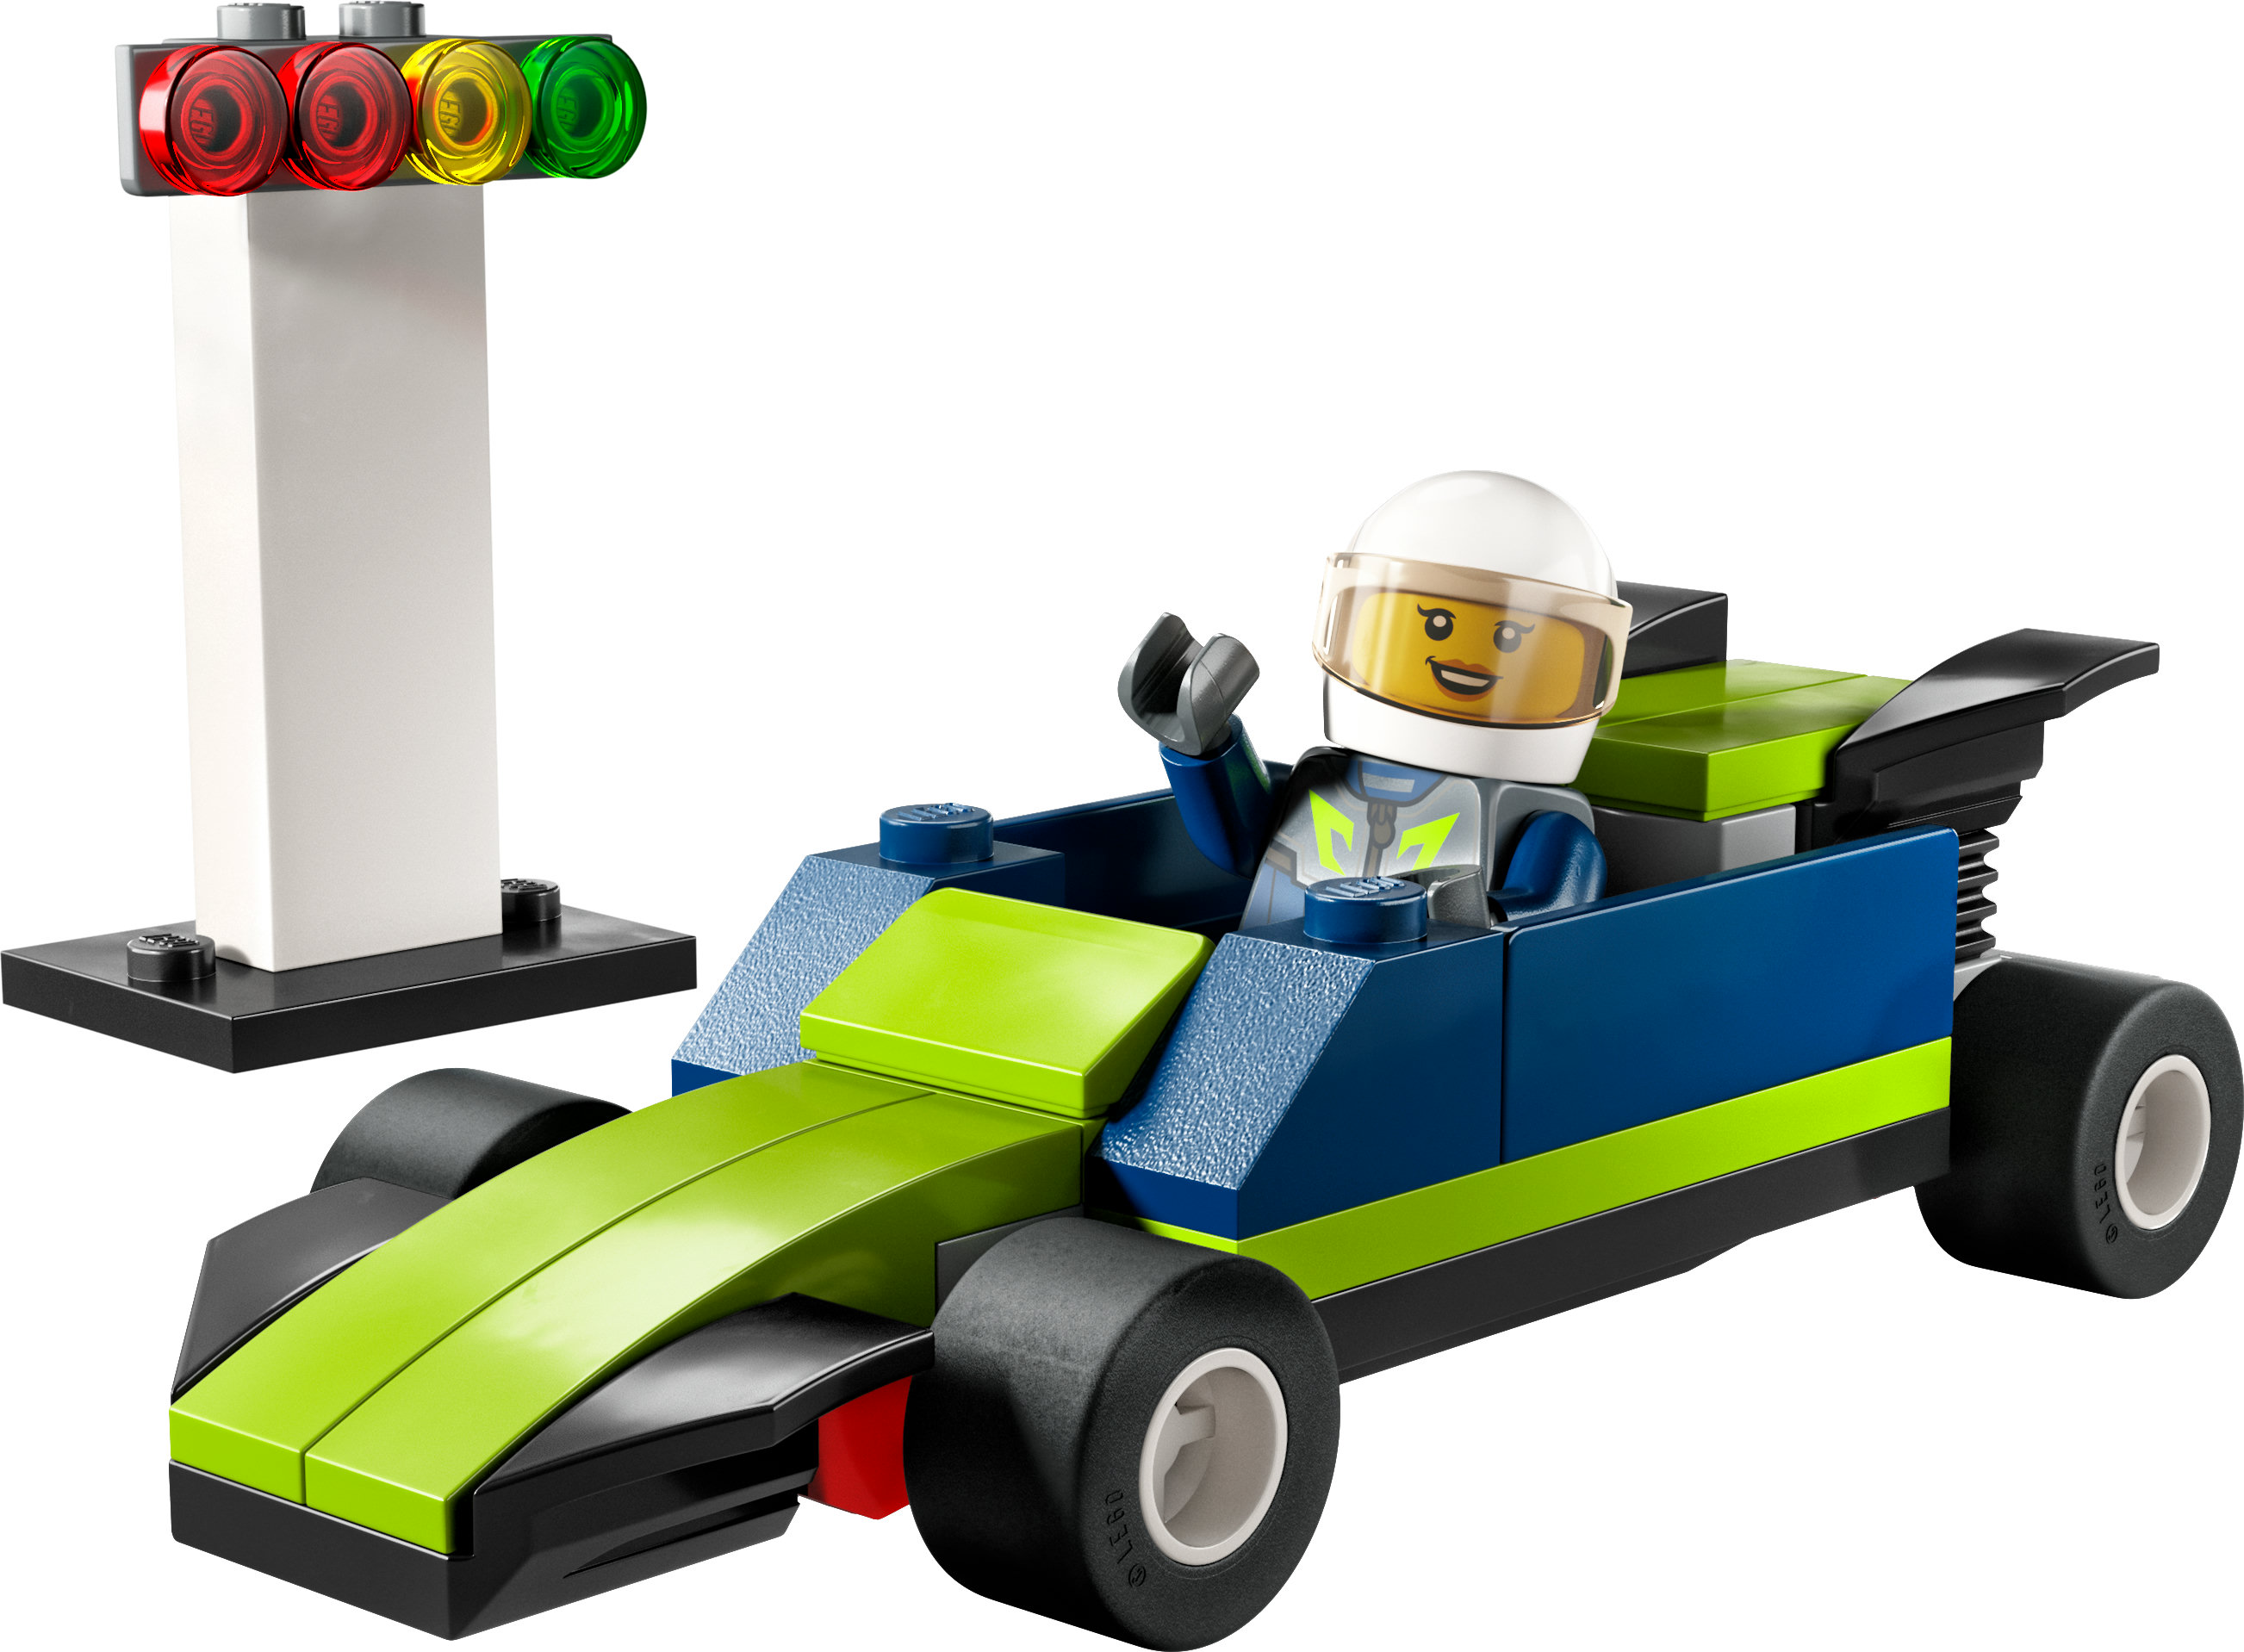 LEGO City 30640 Rennauto Polybag